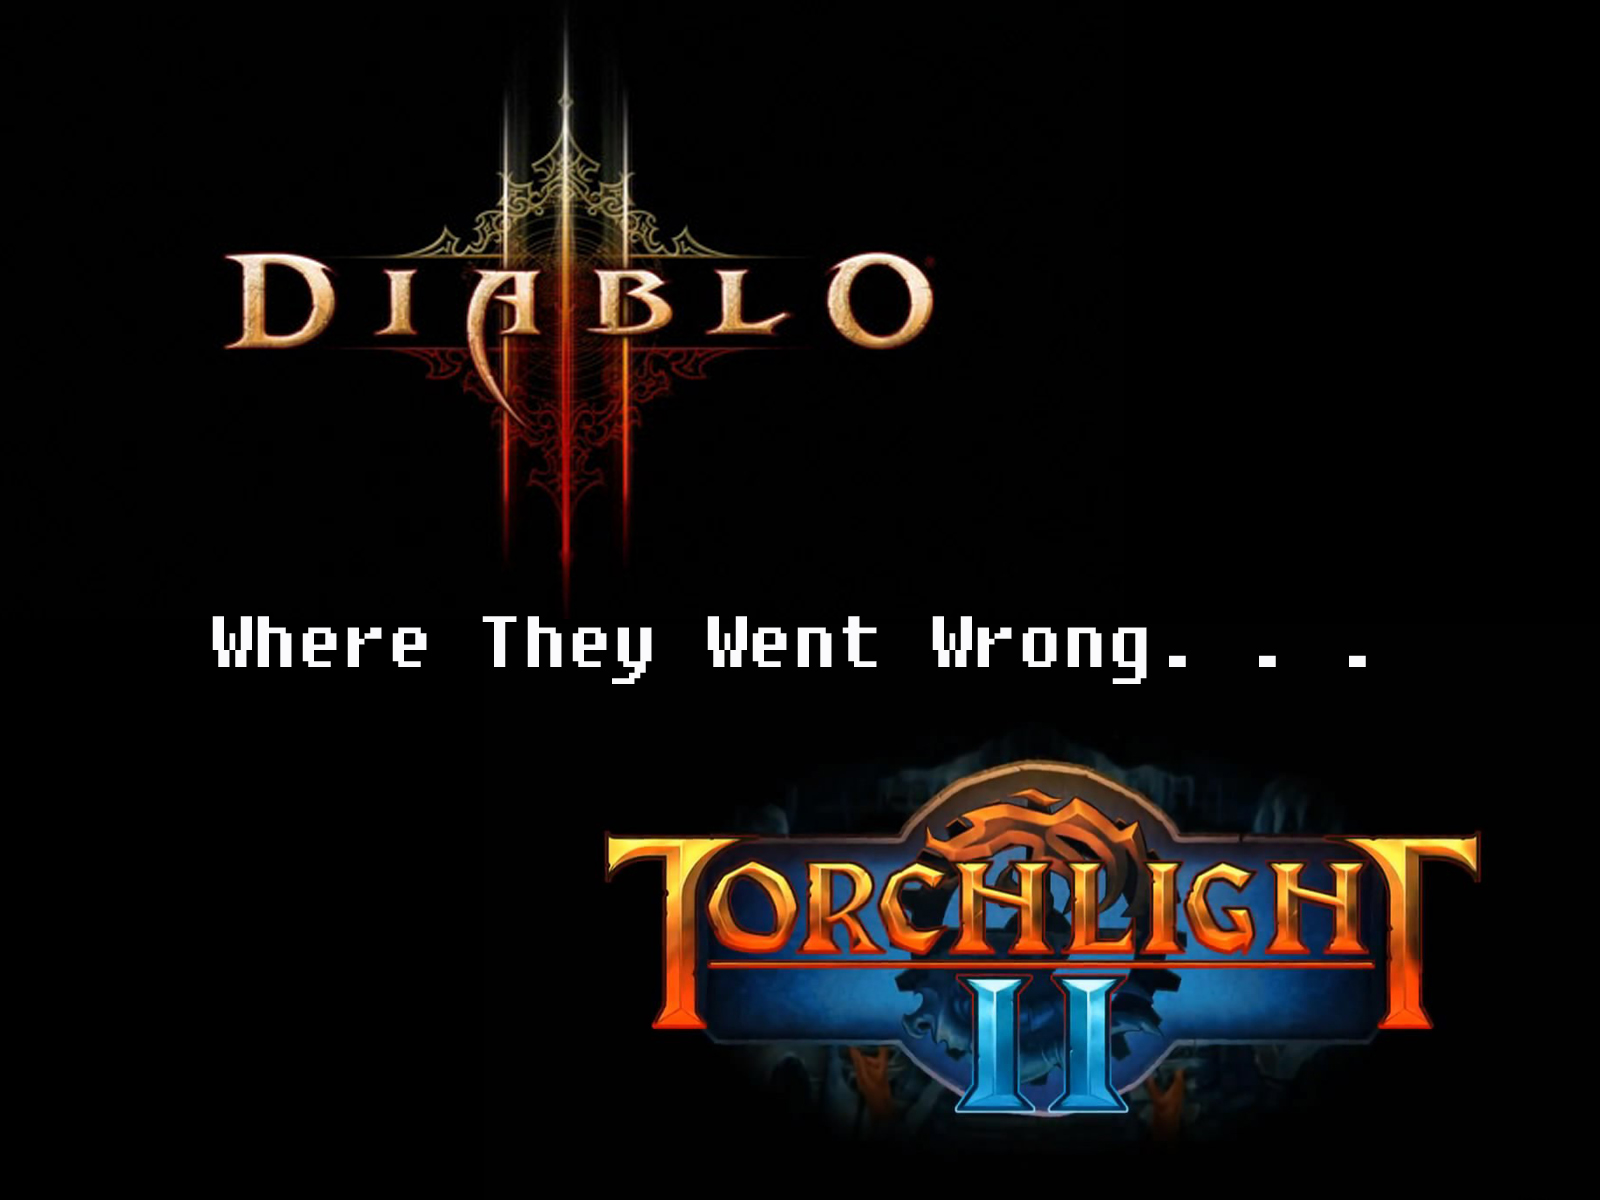 Diablo 3 and Torchlight 2 logos